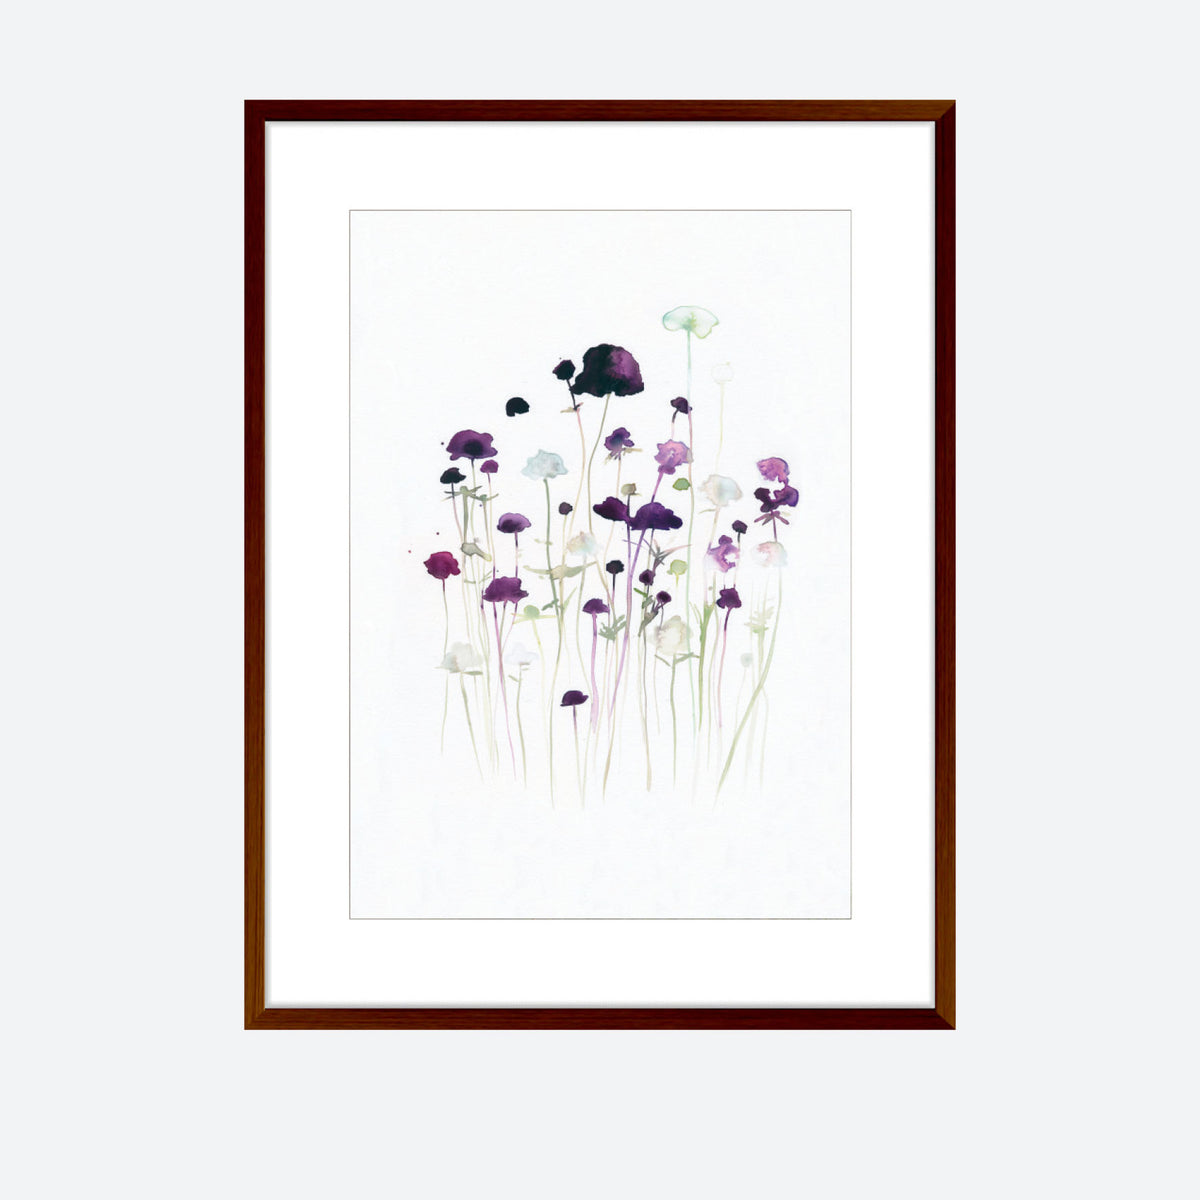 Toril Baekmark - Fine Art Prints - Flower Poster No.12